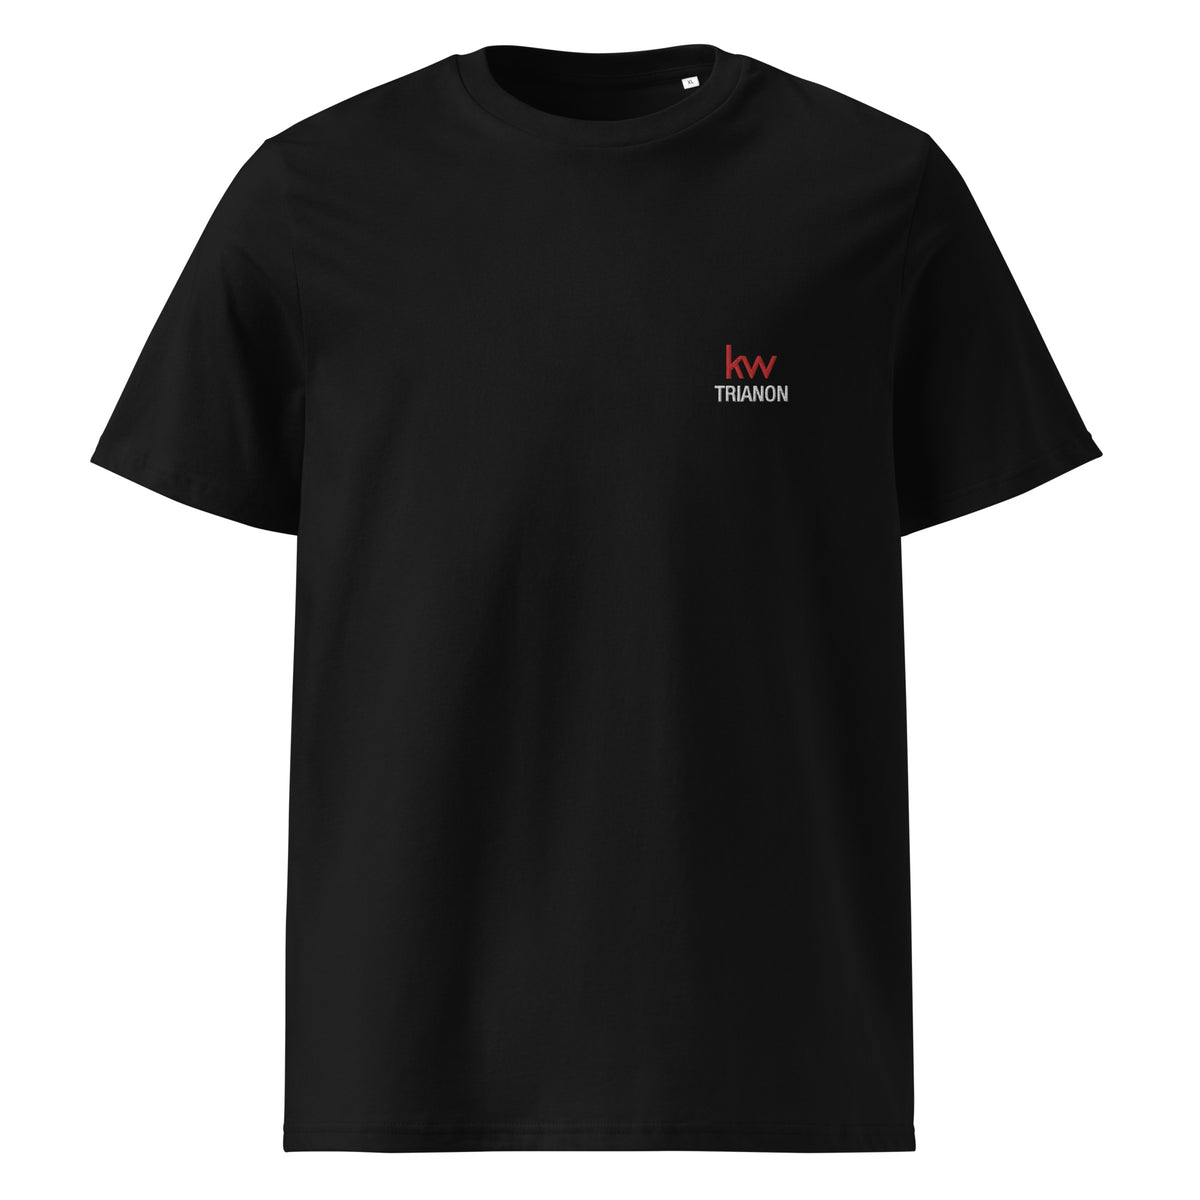 T-Shirt Unisexe Brodé - KW Trianon